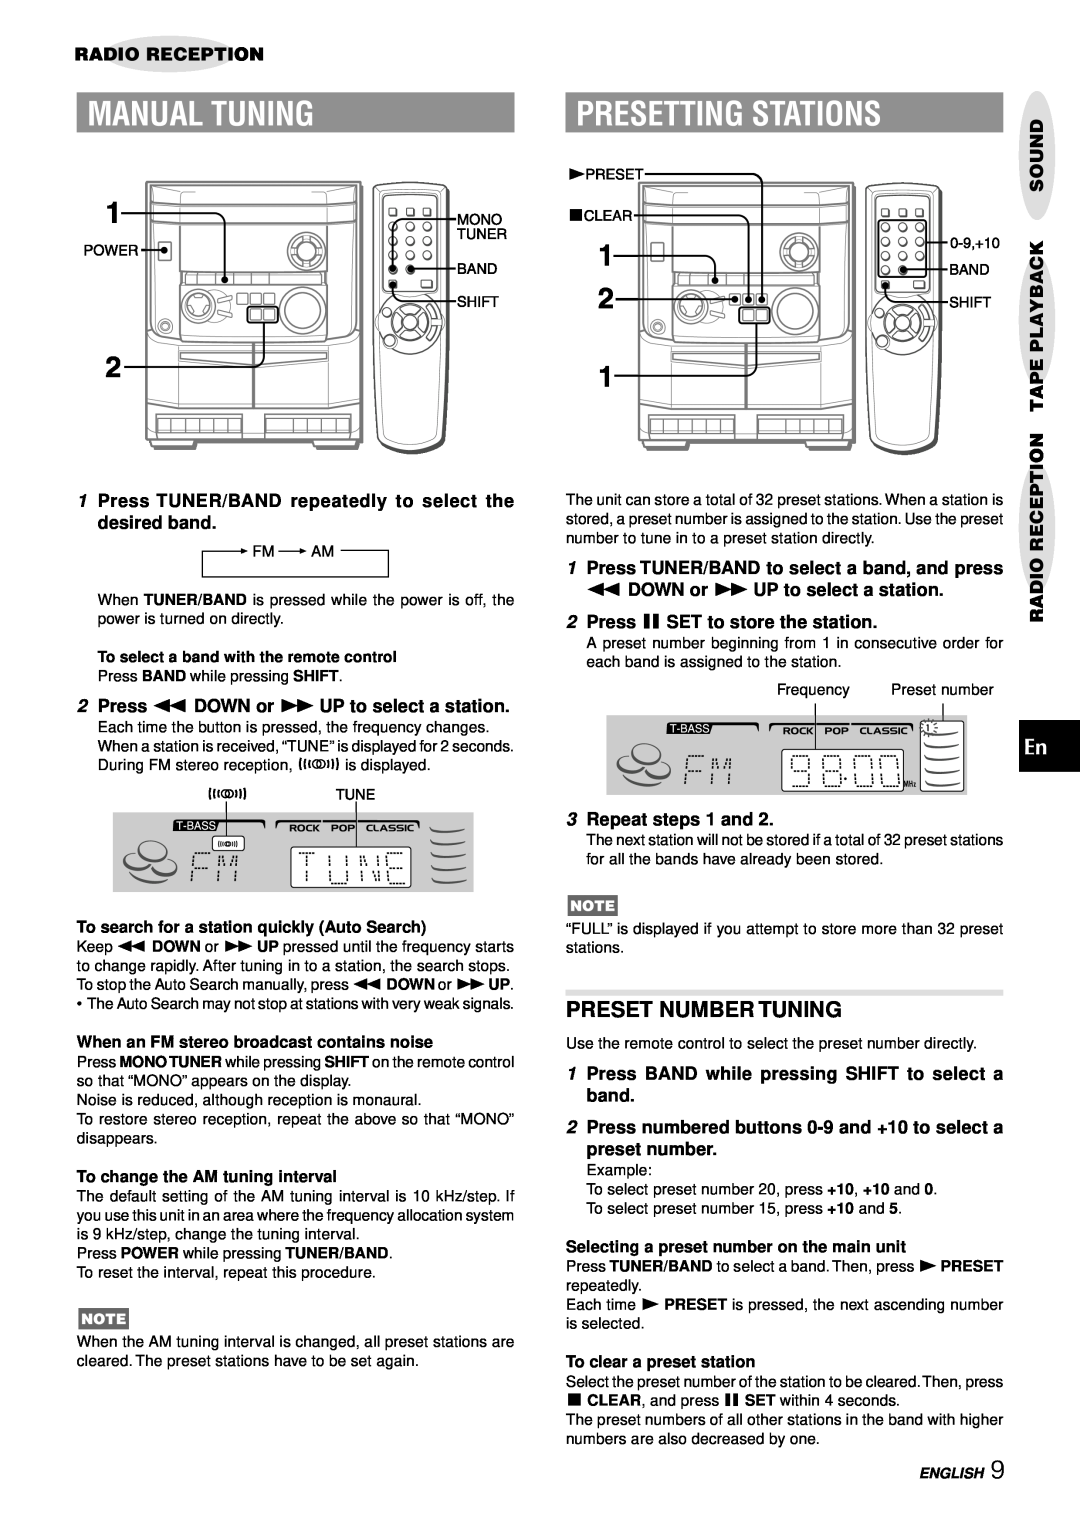 Aiwa NSX-AJ14 Manual Tuning, Presetting Stations, Preset Number Tuning, Radio Reception, Sound, Tapeplayback 